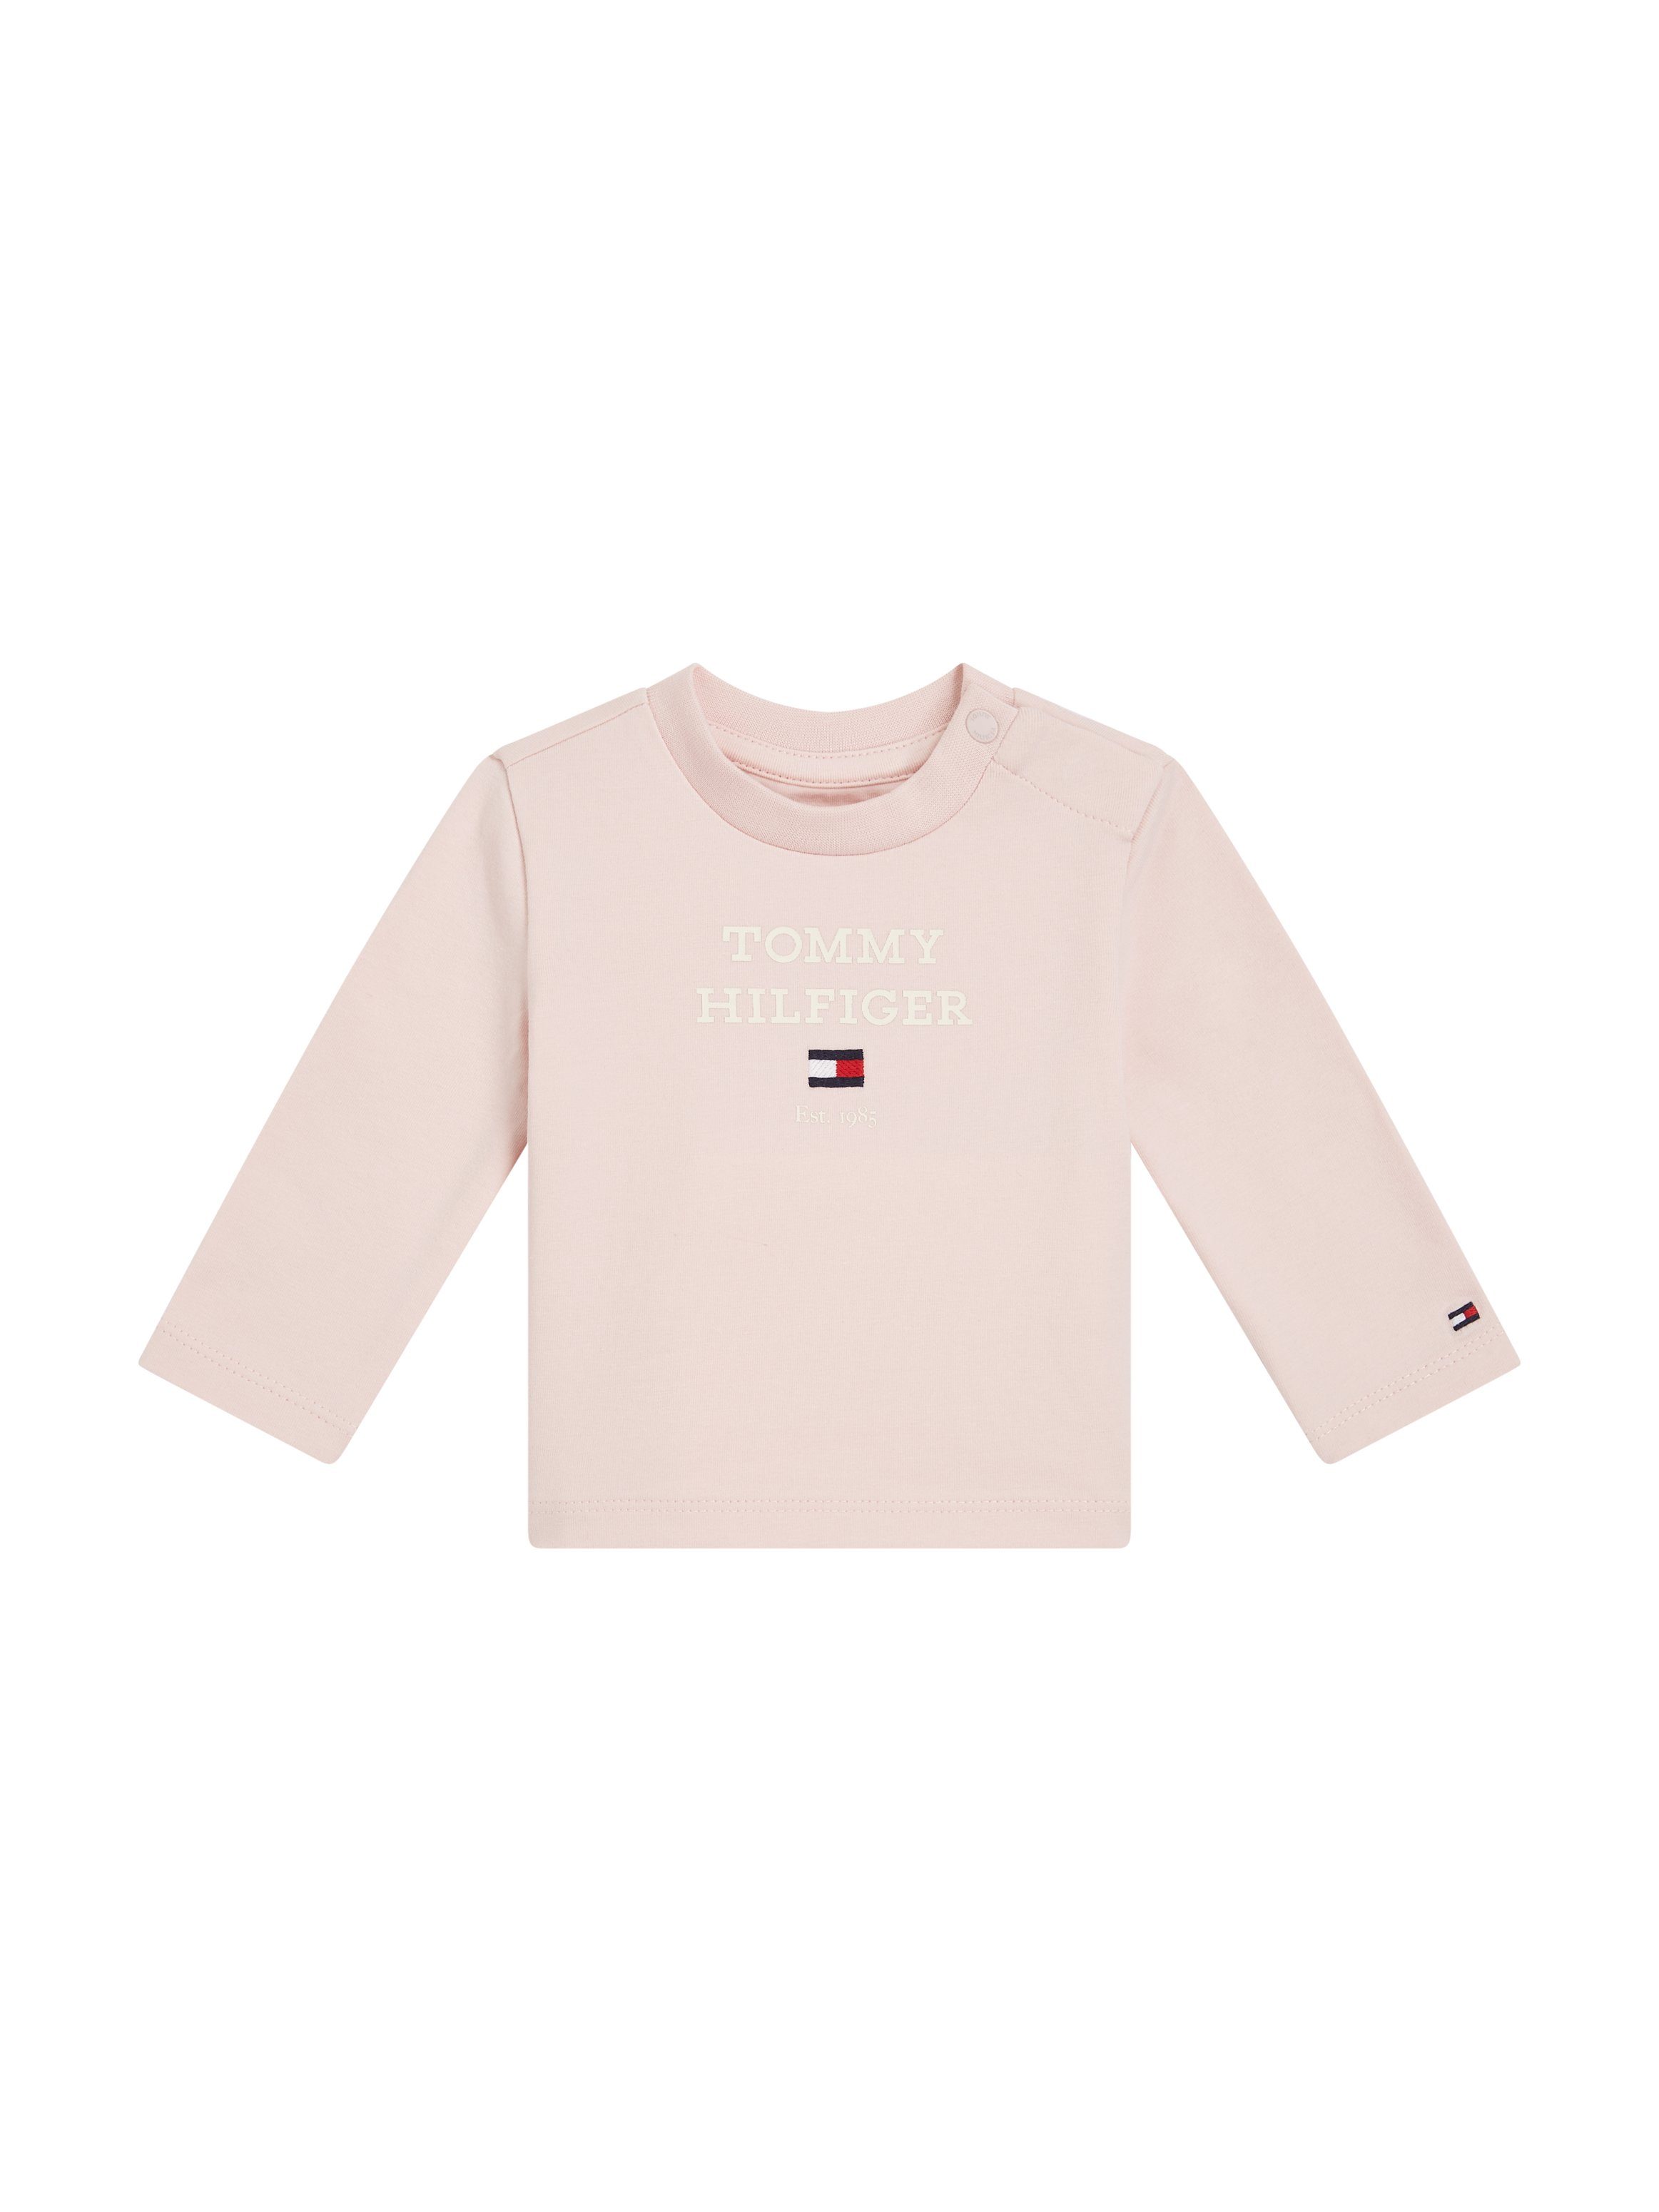 BABY Hilfiger TH LOGO Tommy Logoschriftzug Whimsy TEE mit Langarmshirt Pink L/S